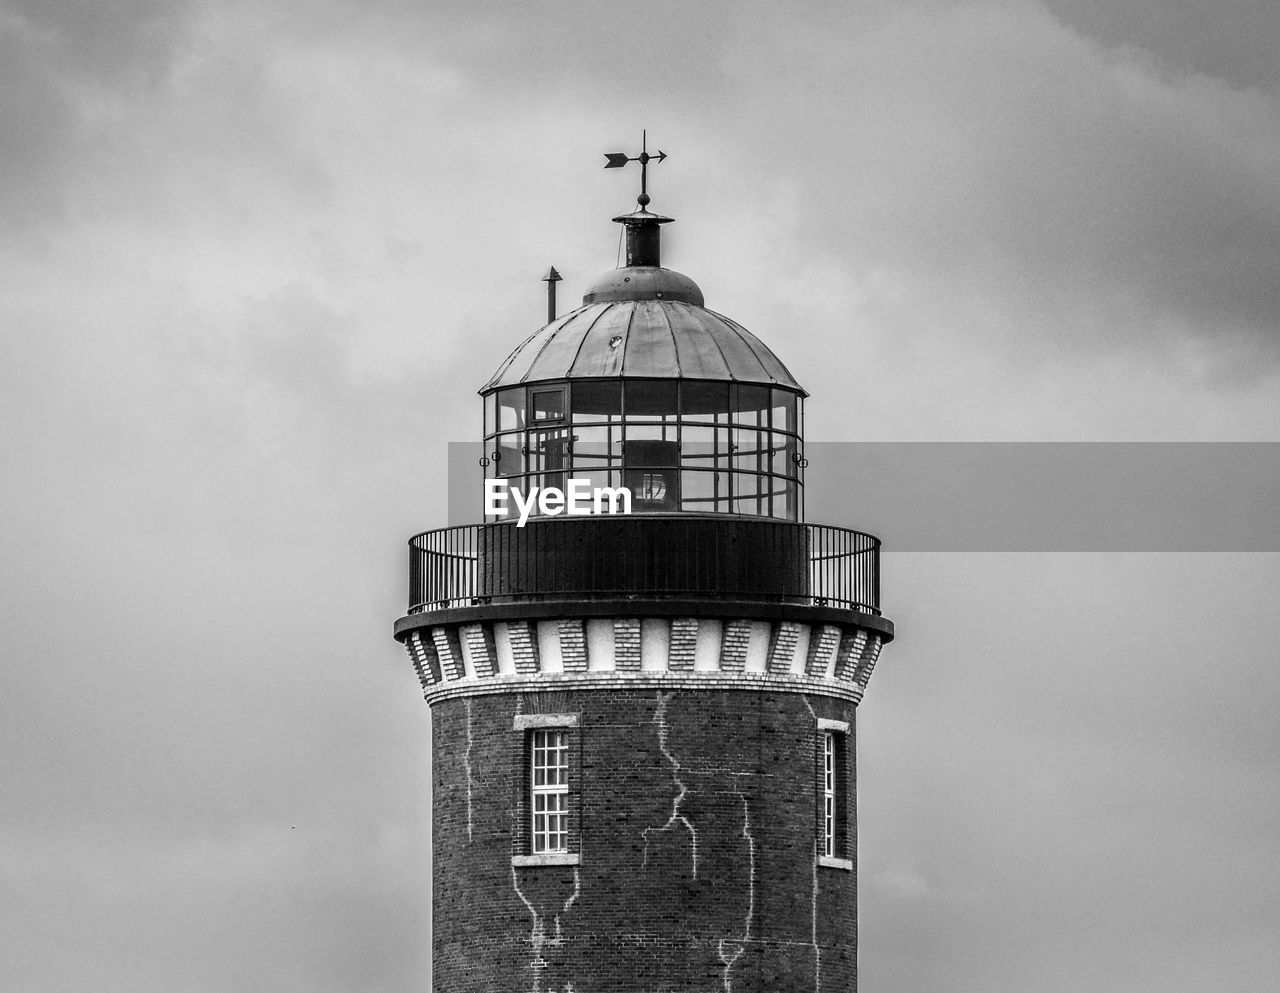 Hamburger leuchtturm, cuxhaven